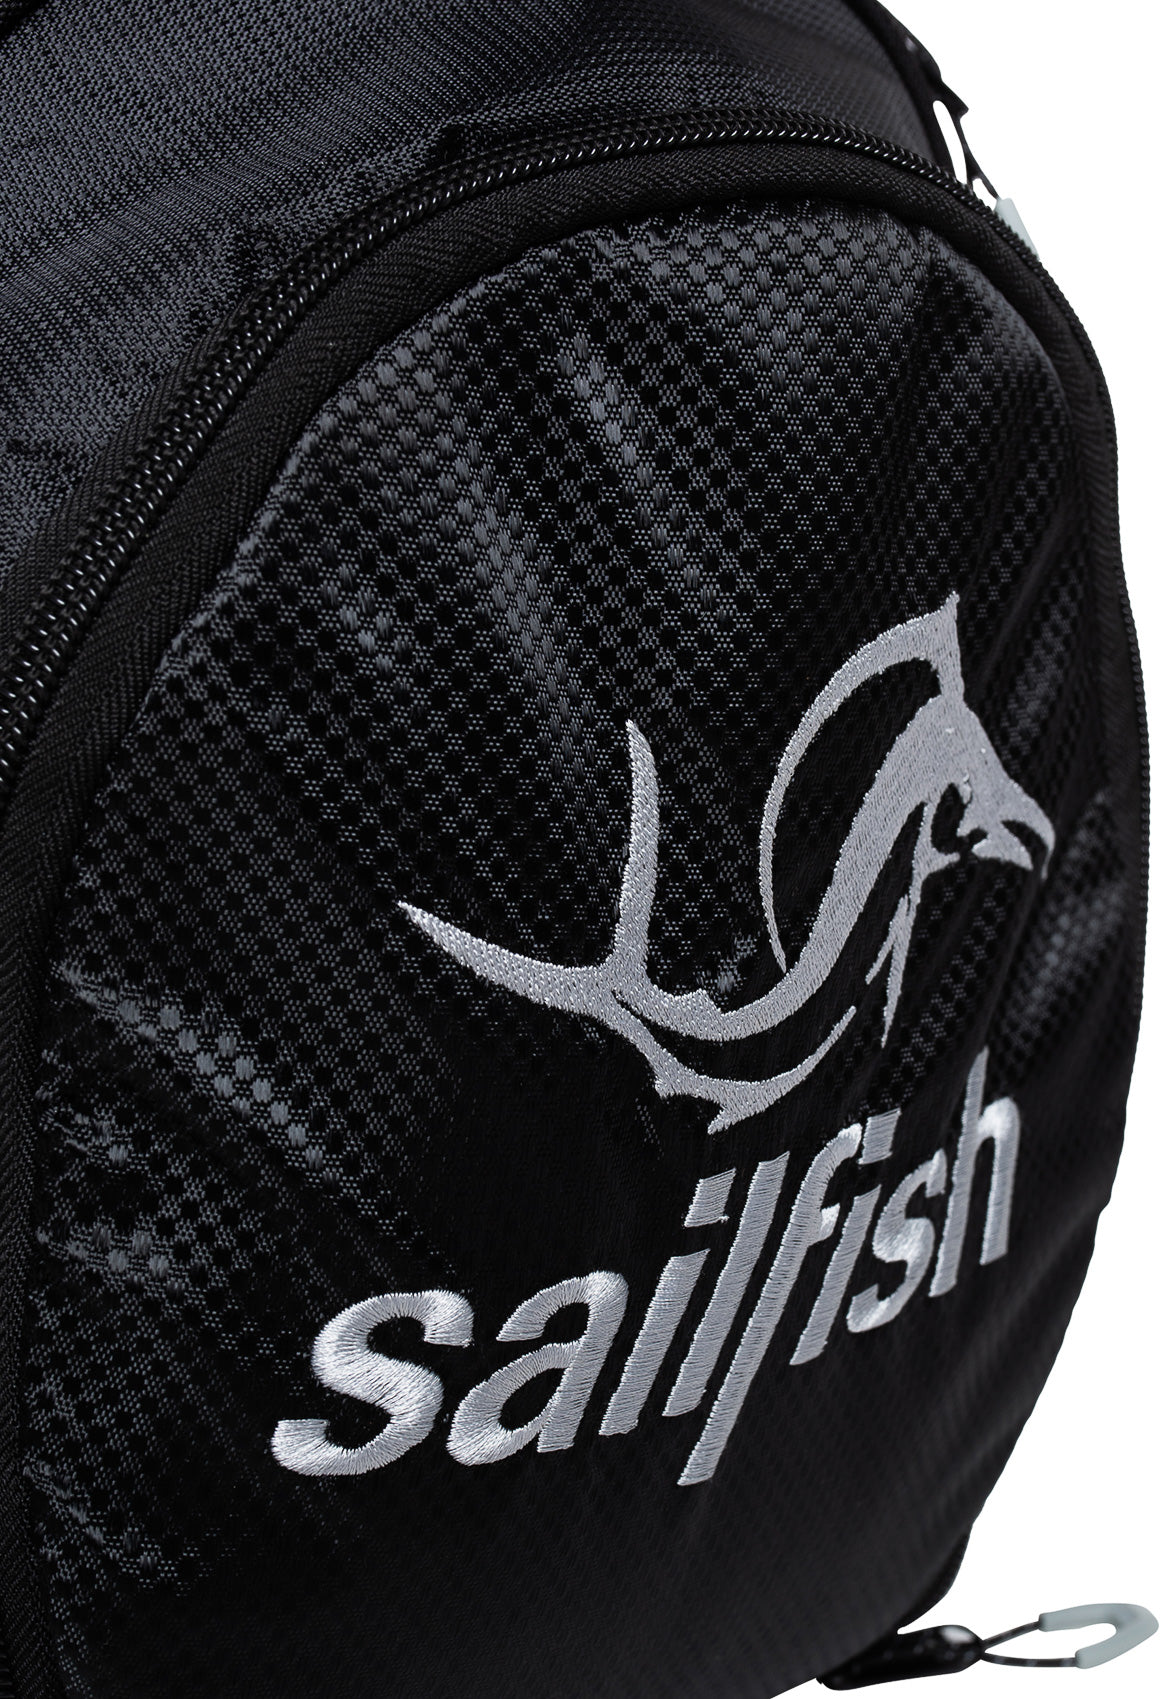 SAILFISH Transition Backpack Kona Black 60L תיק גב בנפח 60 ליטרים